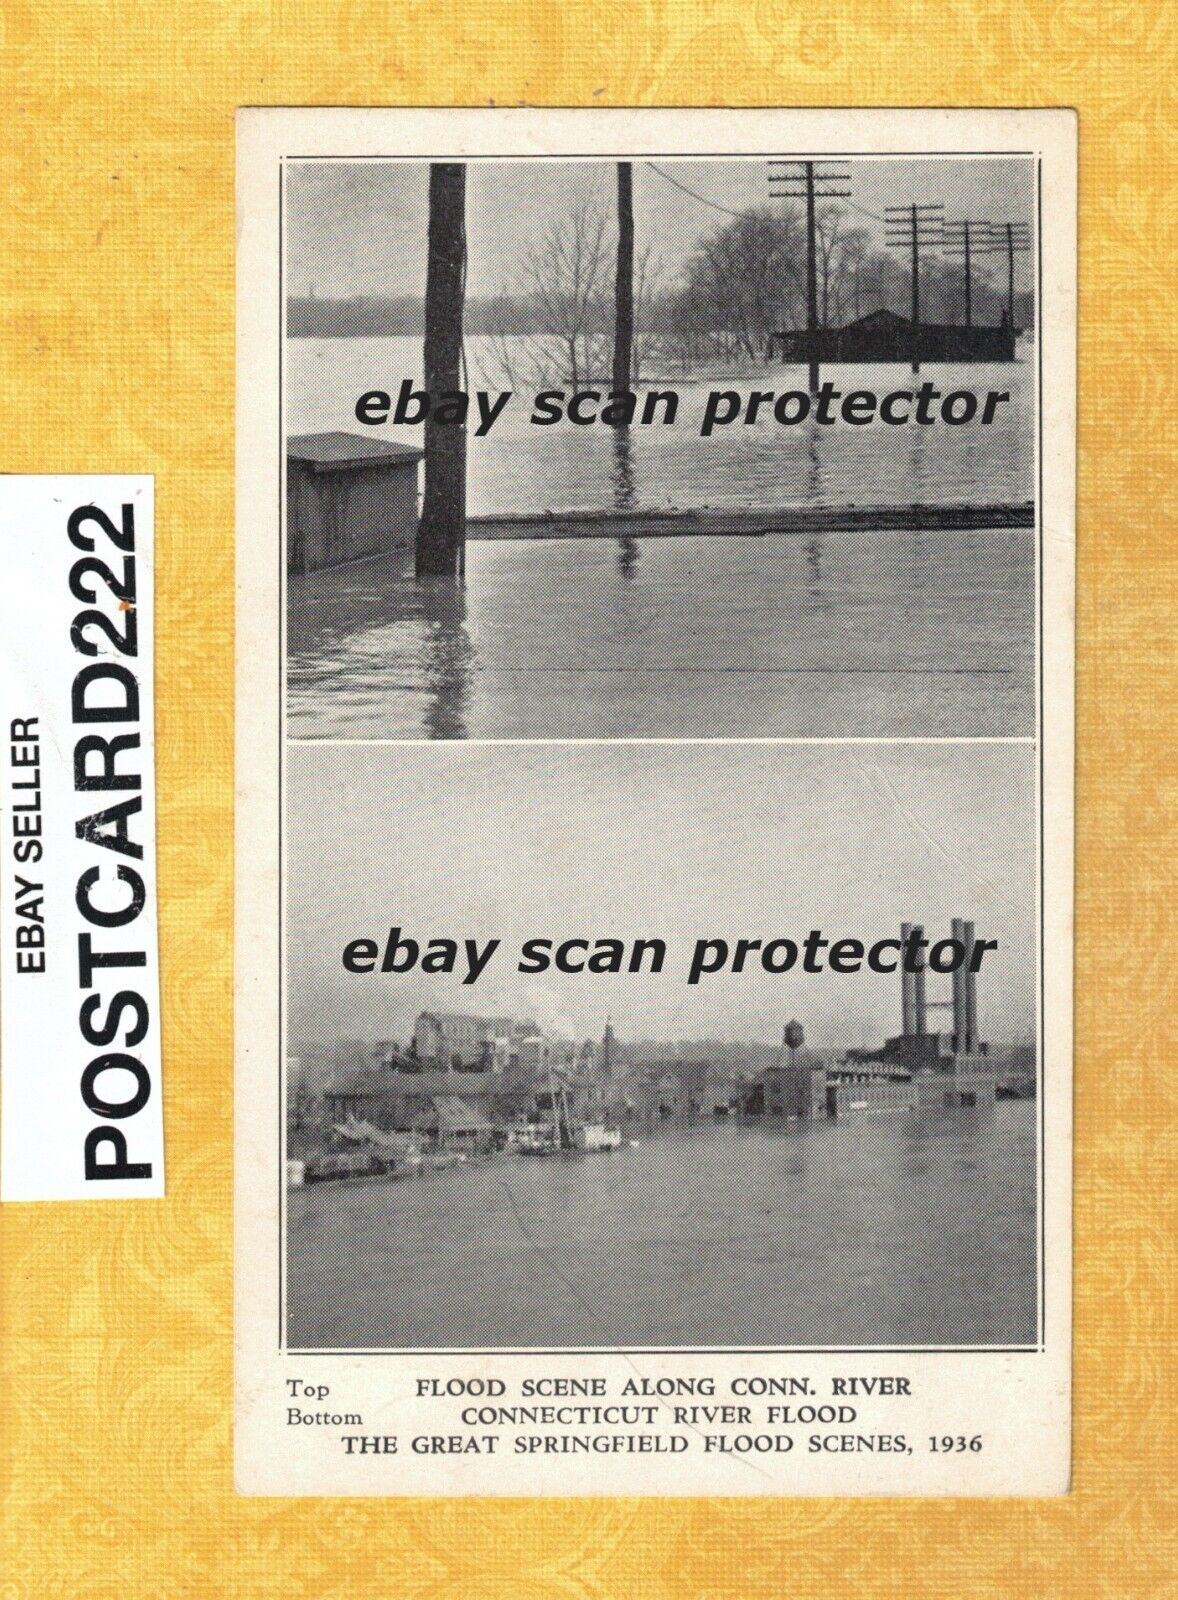 MA Springfield 1936 vintage postcard FLOOD buildings along conn river Mass